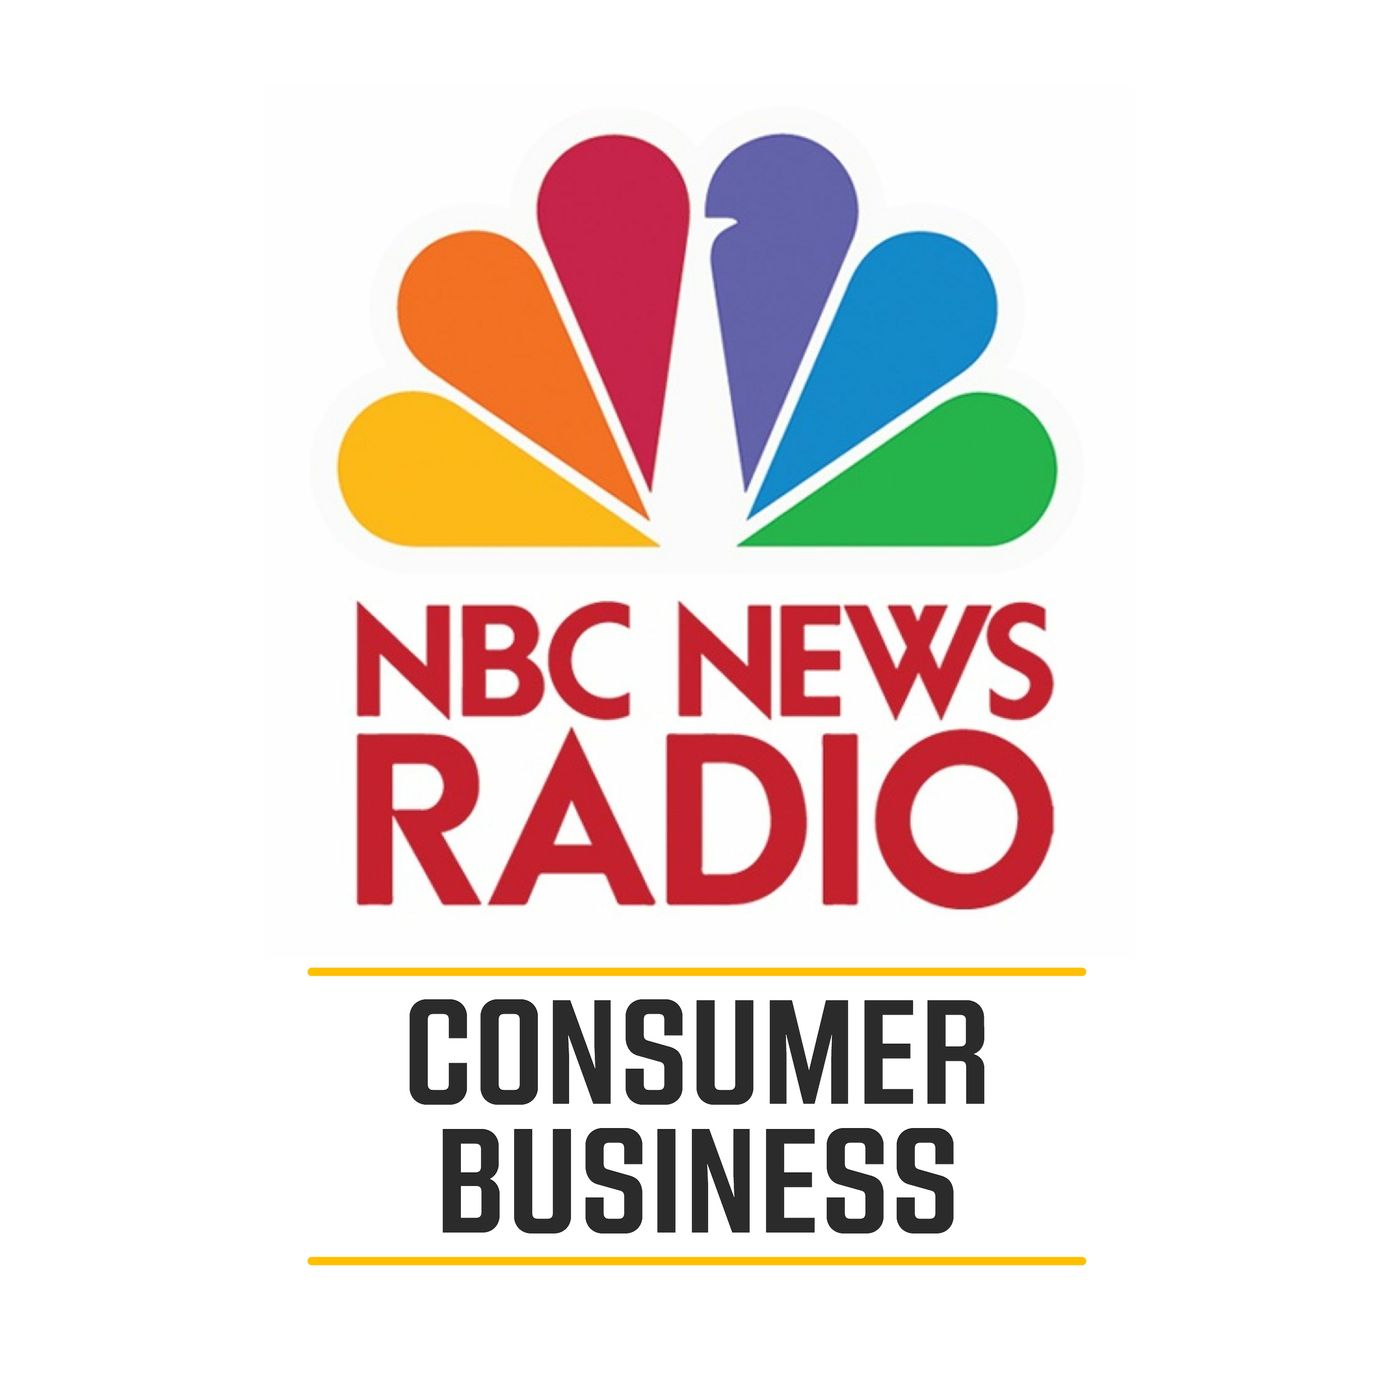 NBC News Radio: Consumer Business